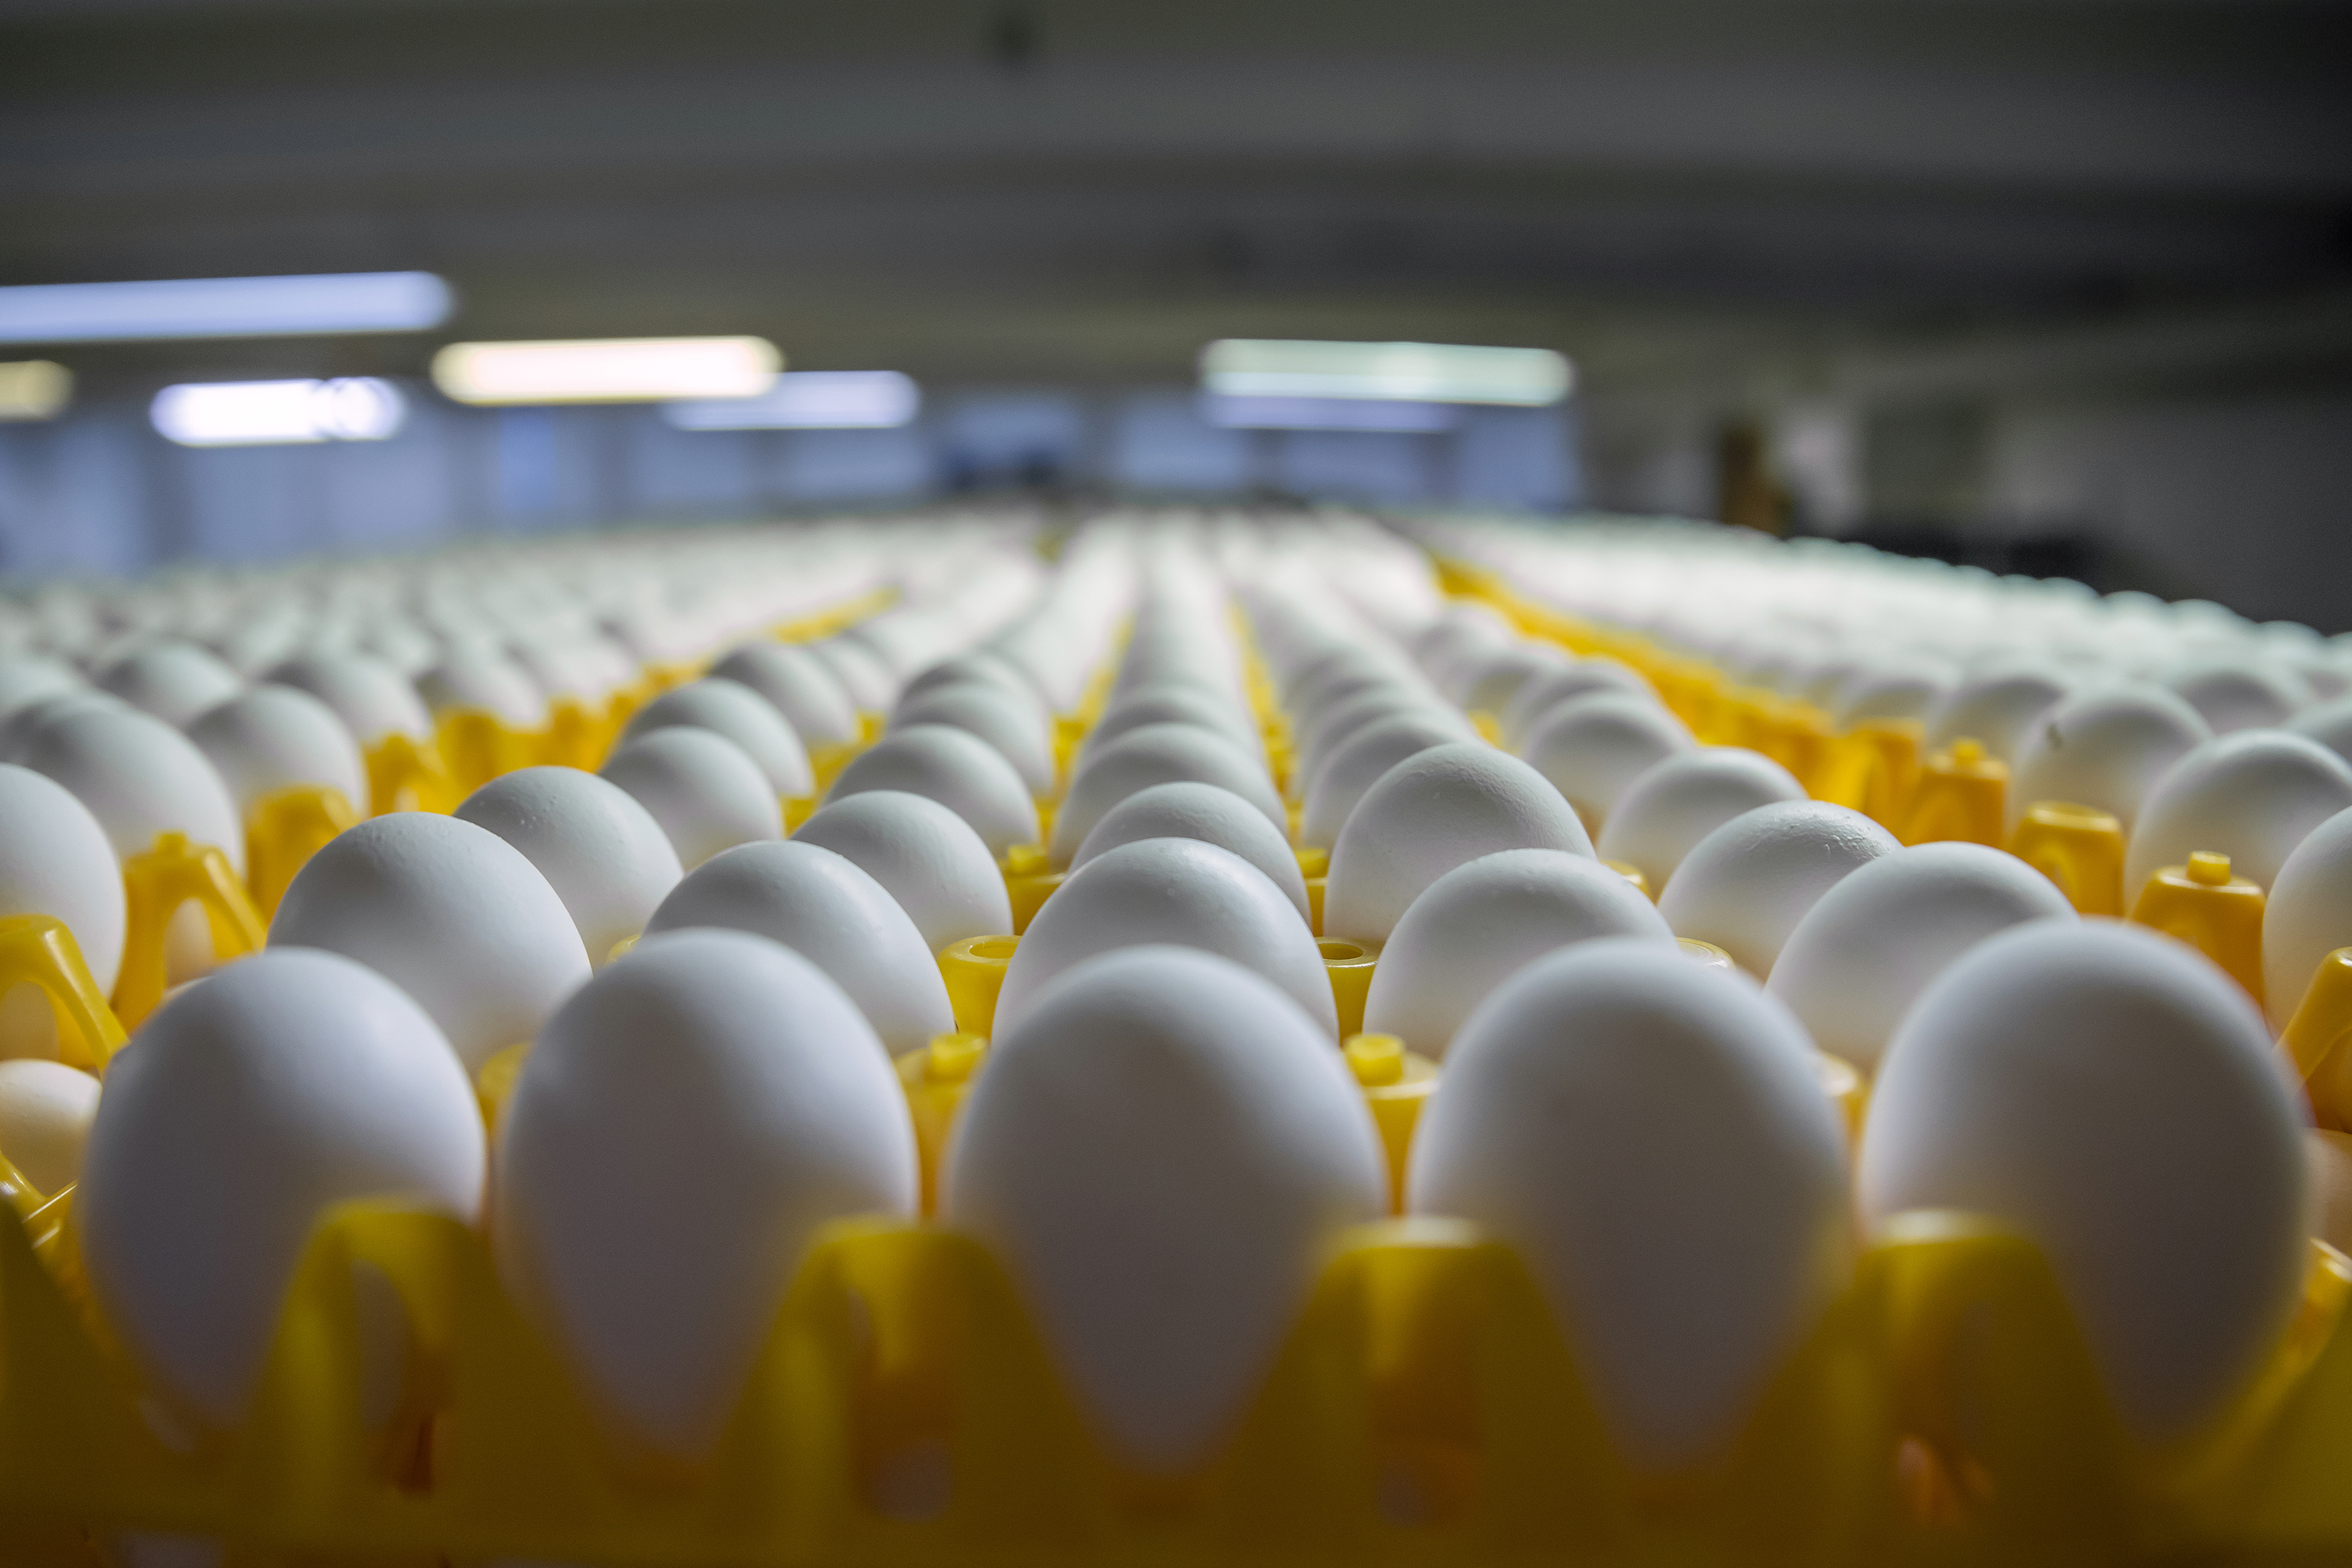 Three brands resemble eggs with a salmonella risk